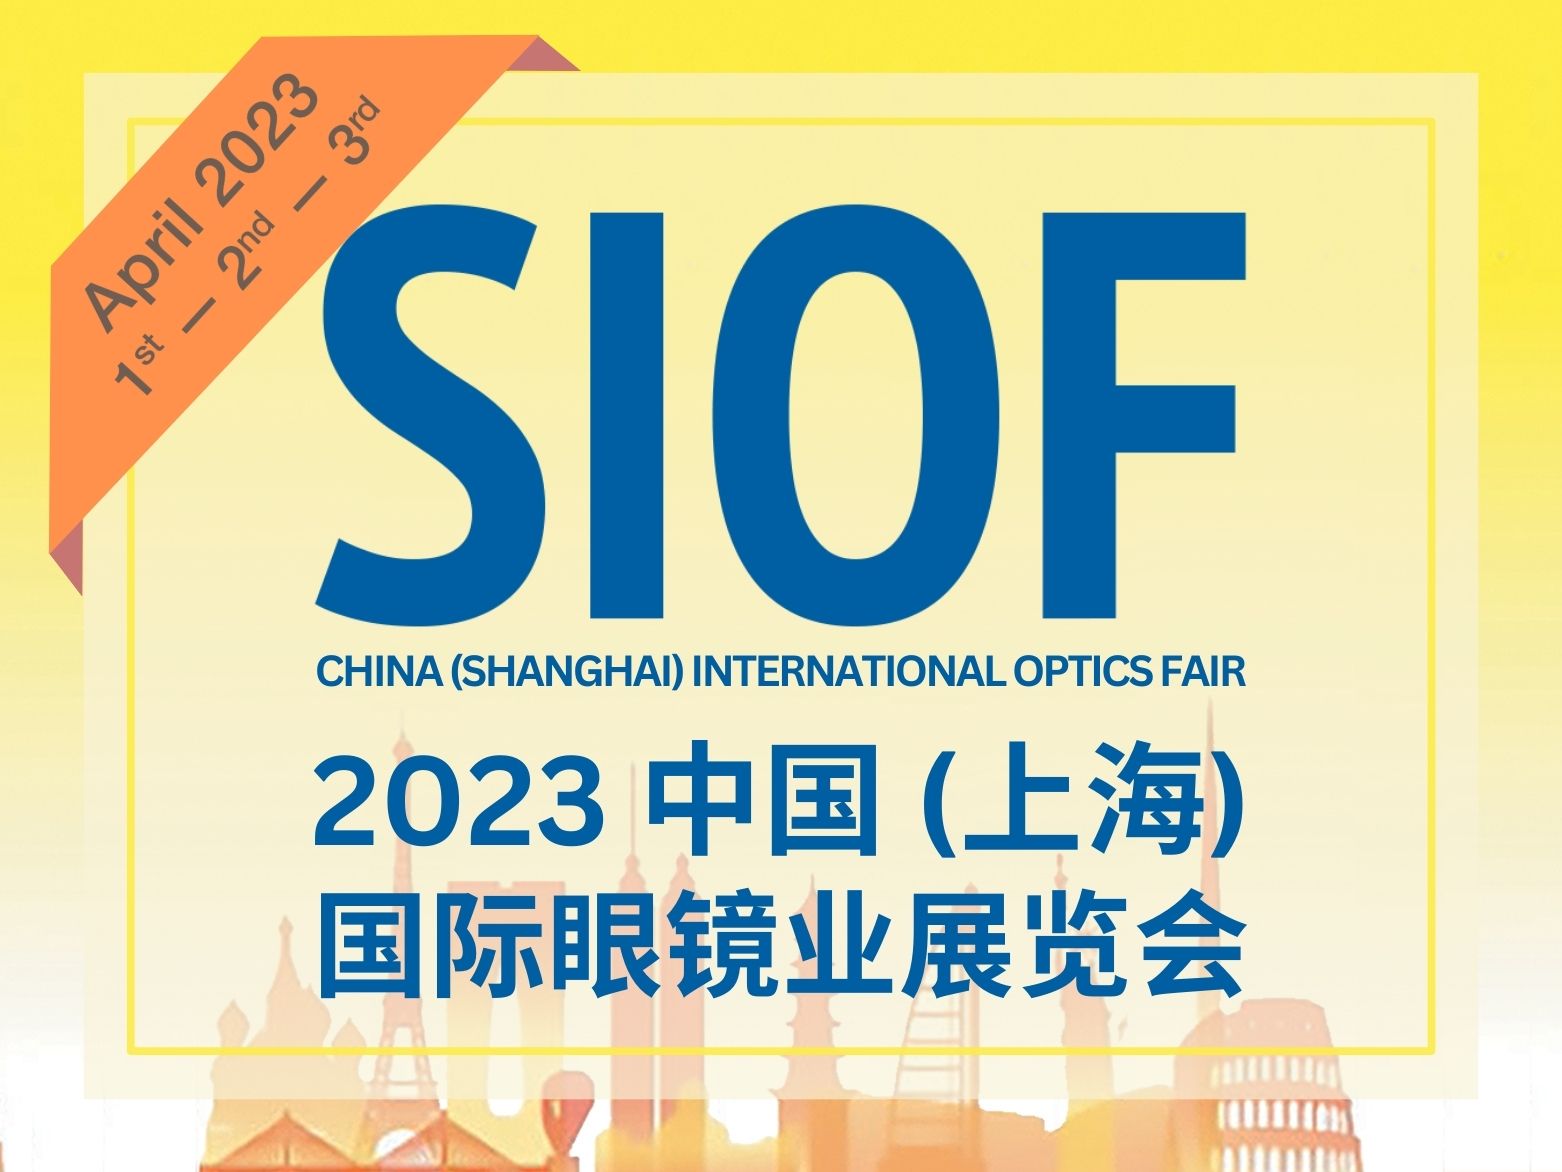 China (Shanghai) International Optics Fair 2023